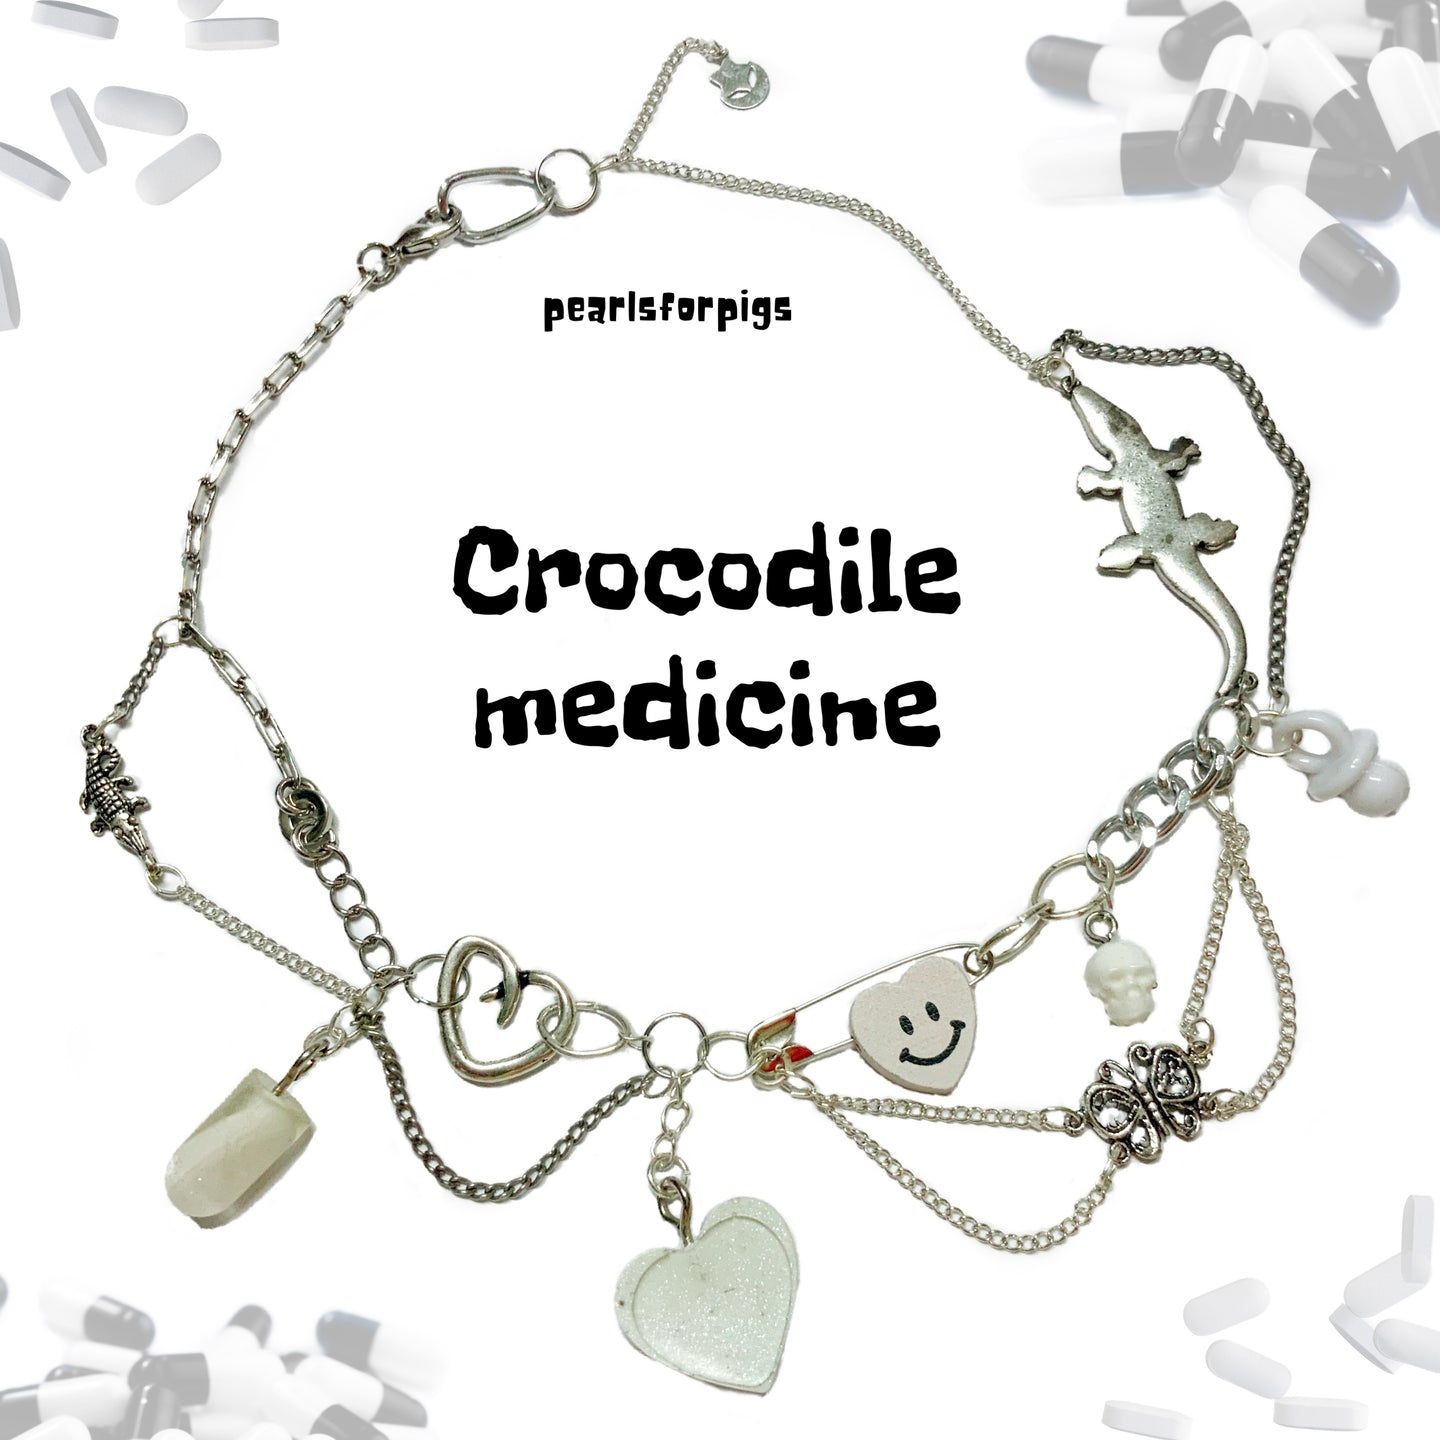 Crocodile medicine